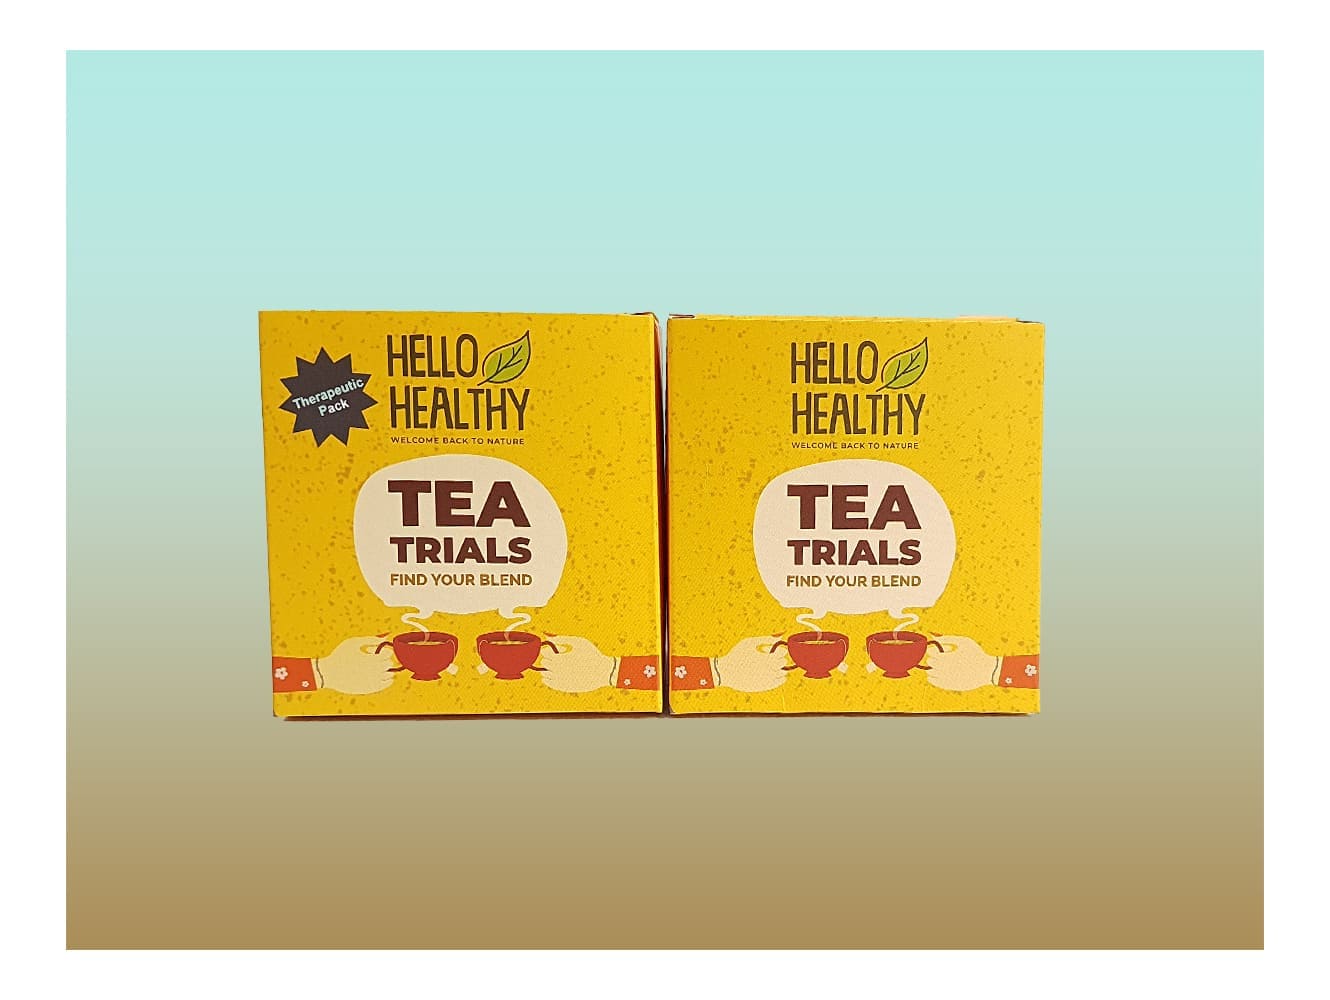 Tea Trials - Find your blend